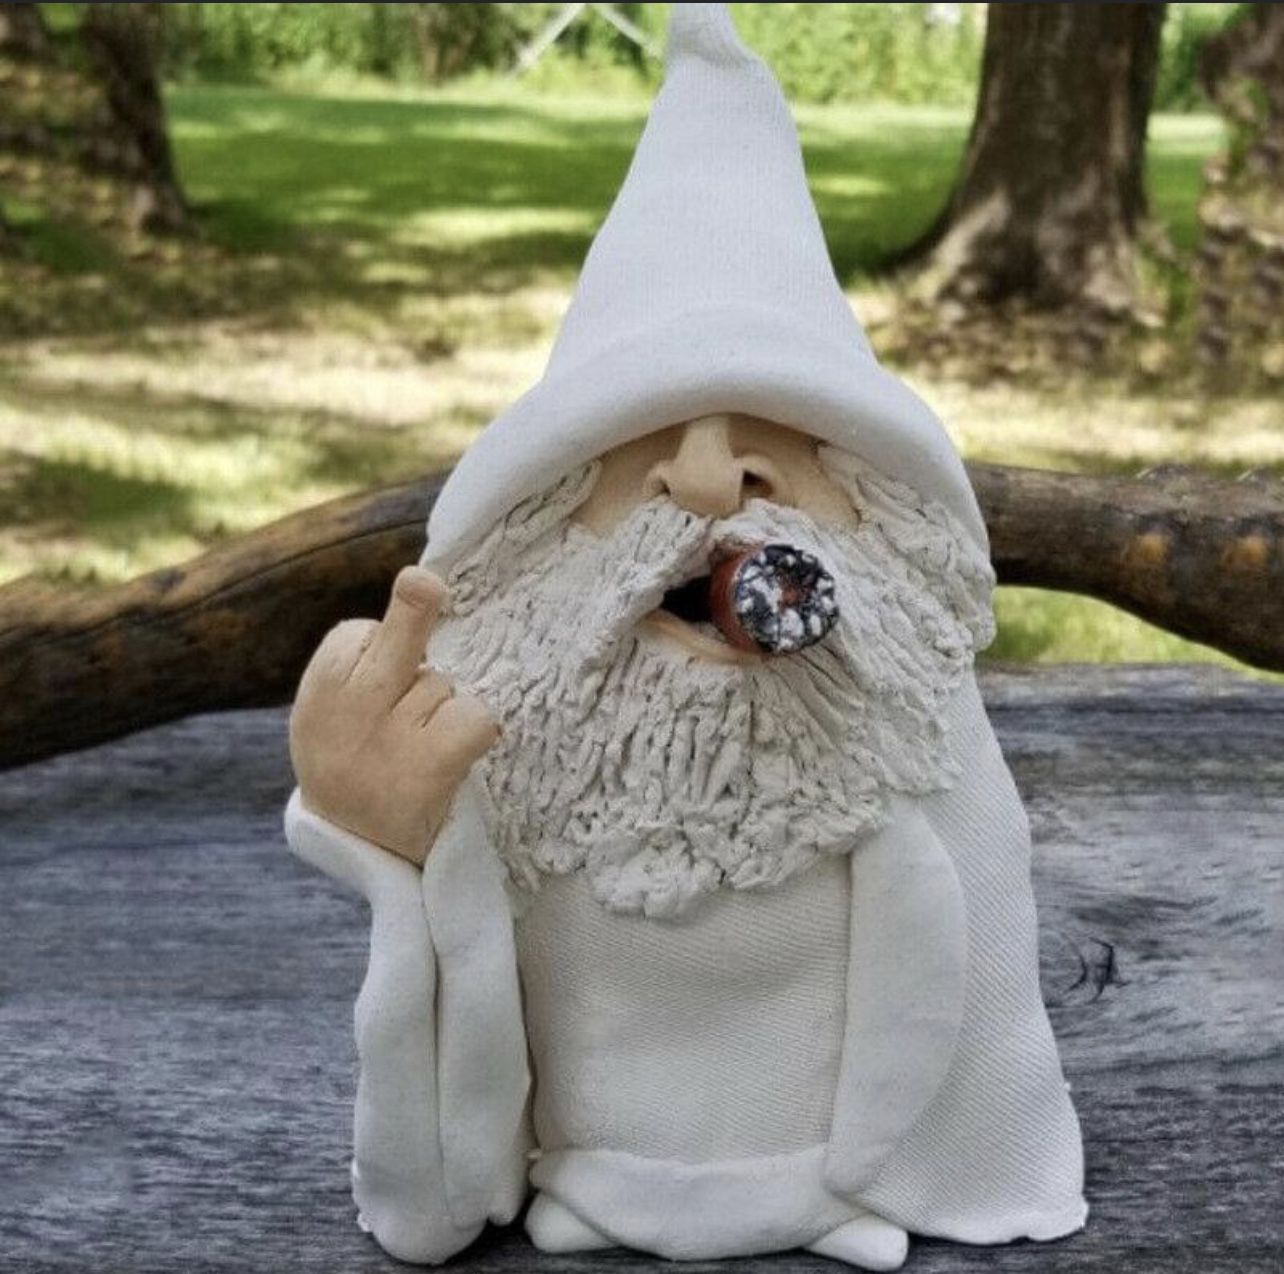 Garden Gnome Statue Old Man with White Beard,Garden Peeker Yard Art unimaginable Garden Sculpture